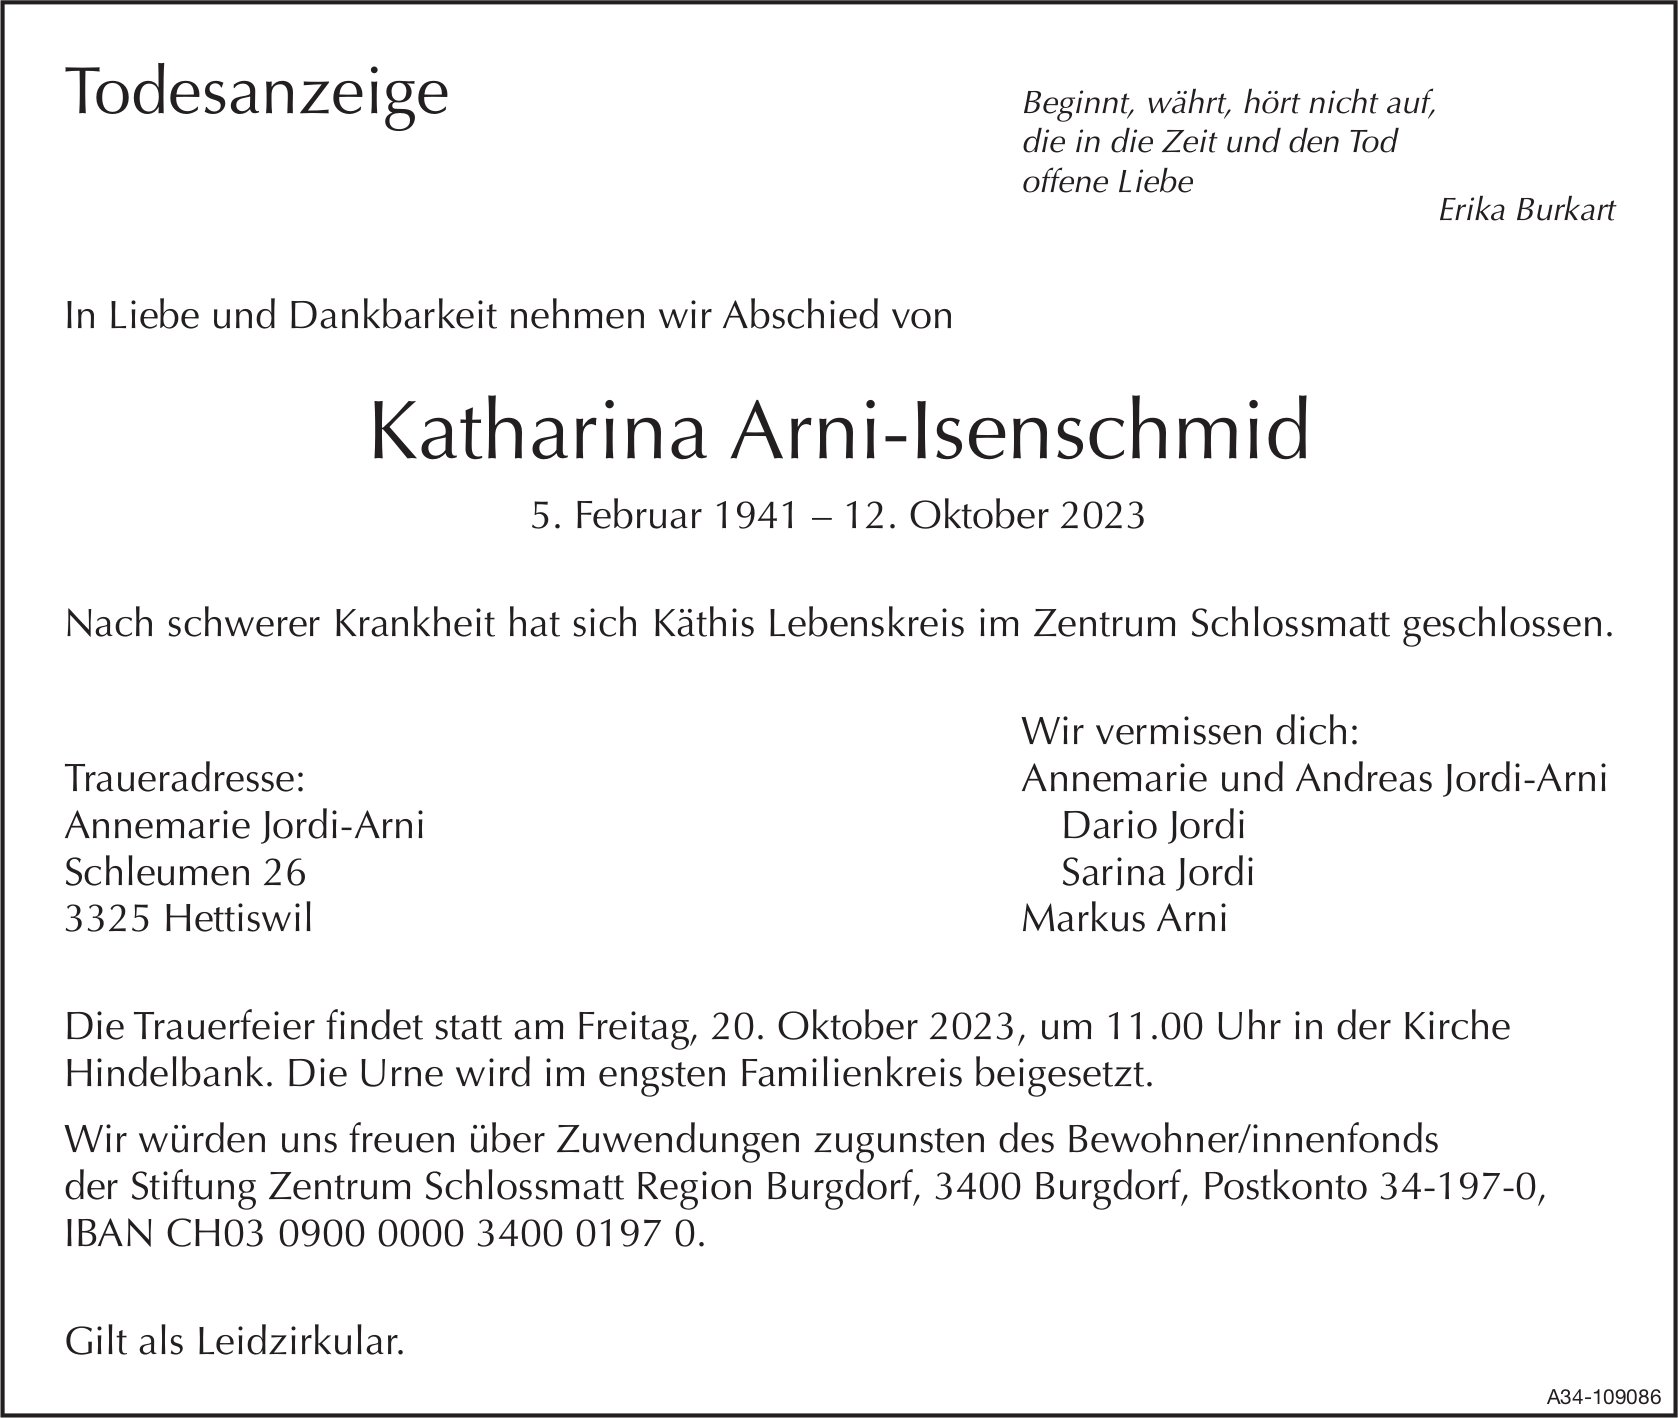 Katharina Arni-Isenschmid, Oktober 2023 / TA